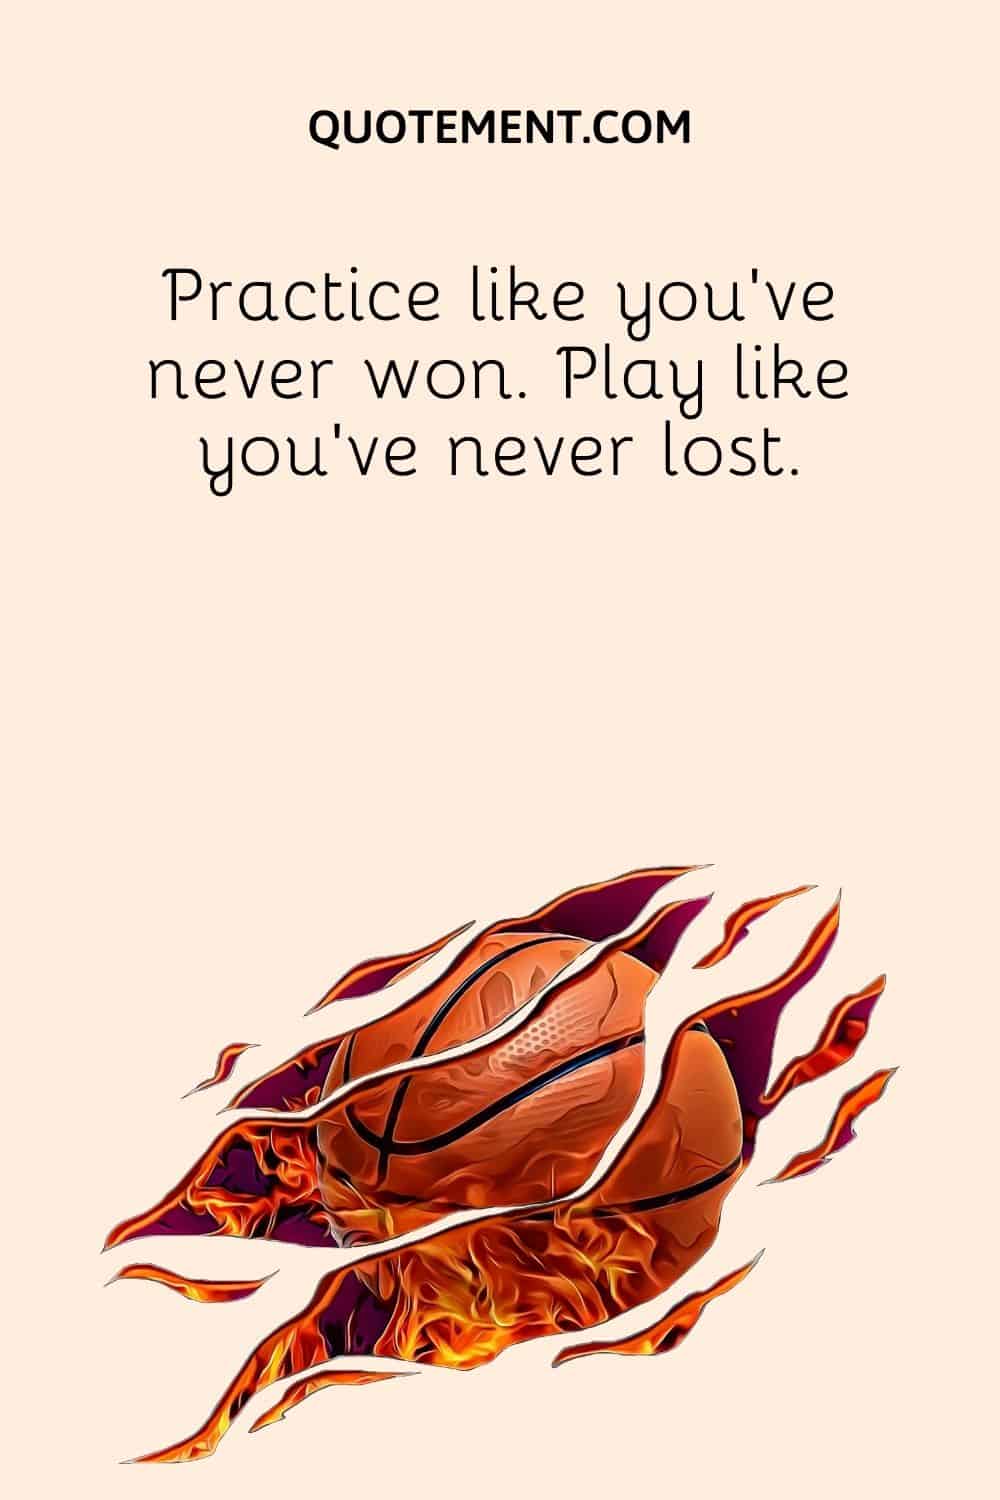 Practice like you’ve never won